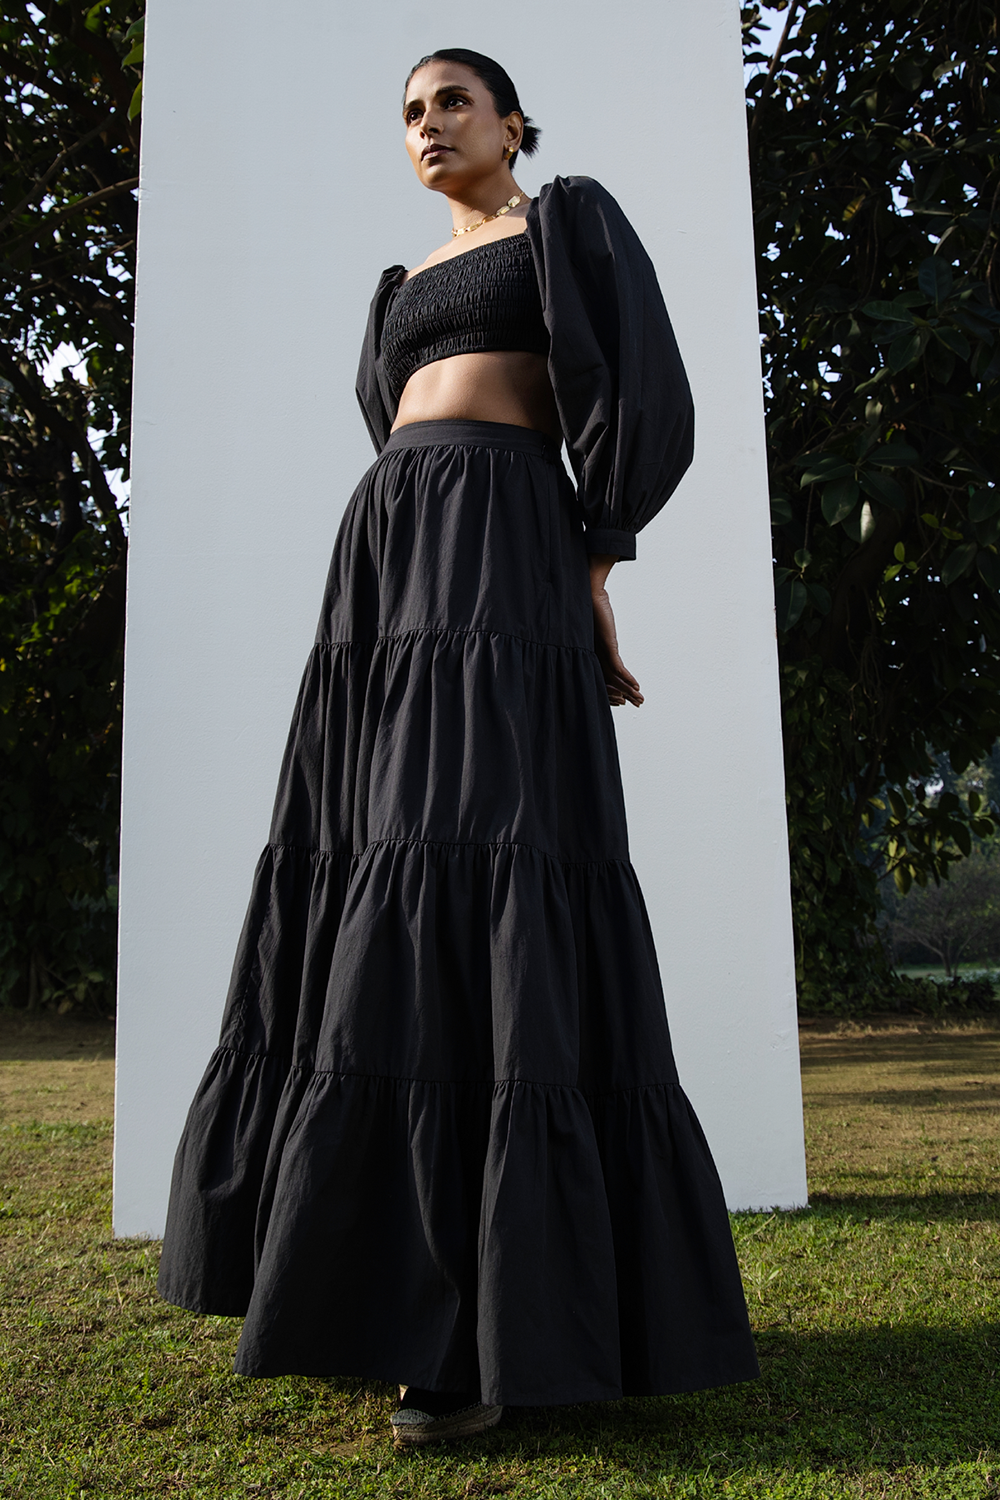 Livia Black Top with Skirt Set